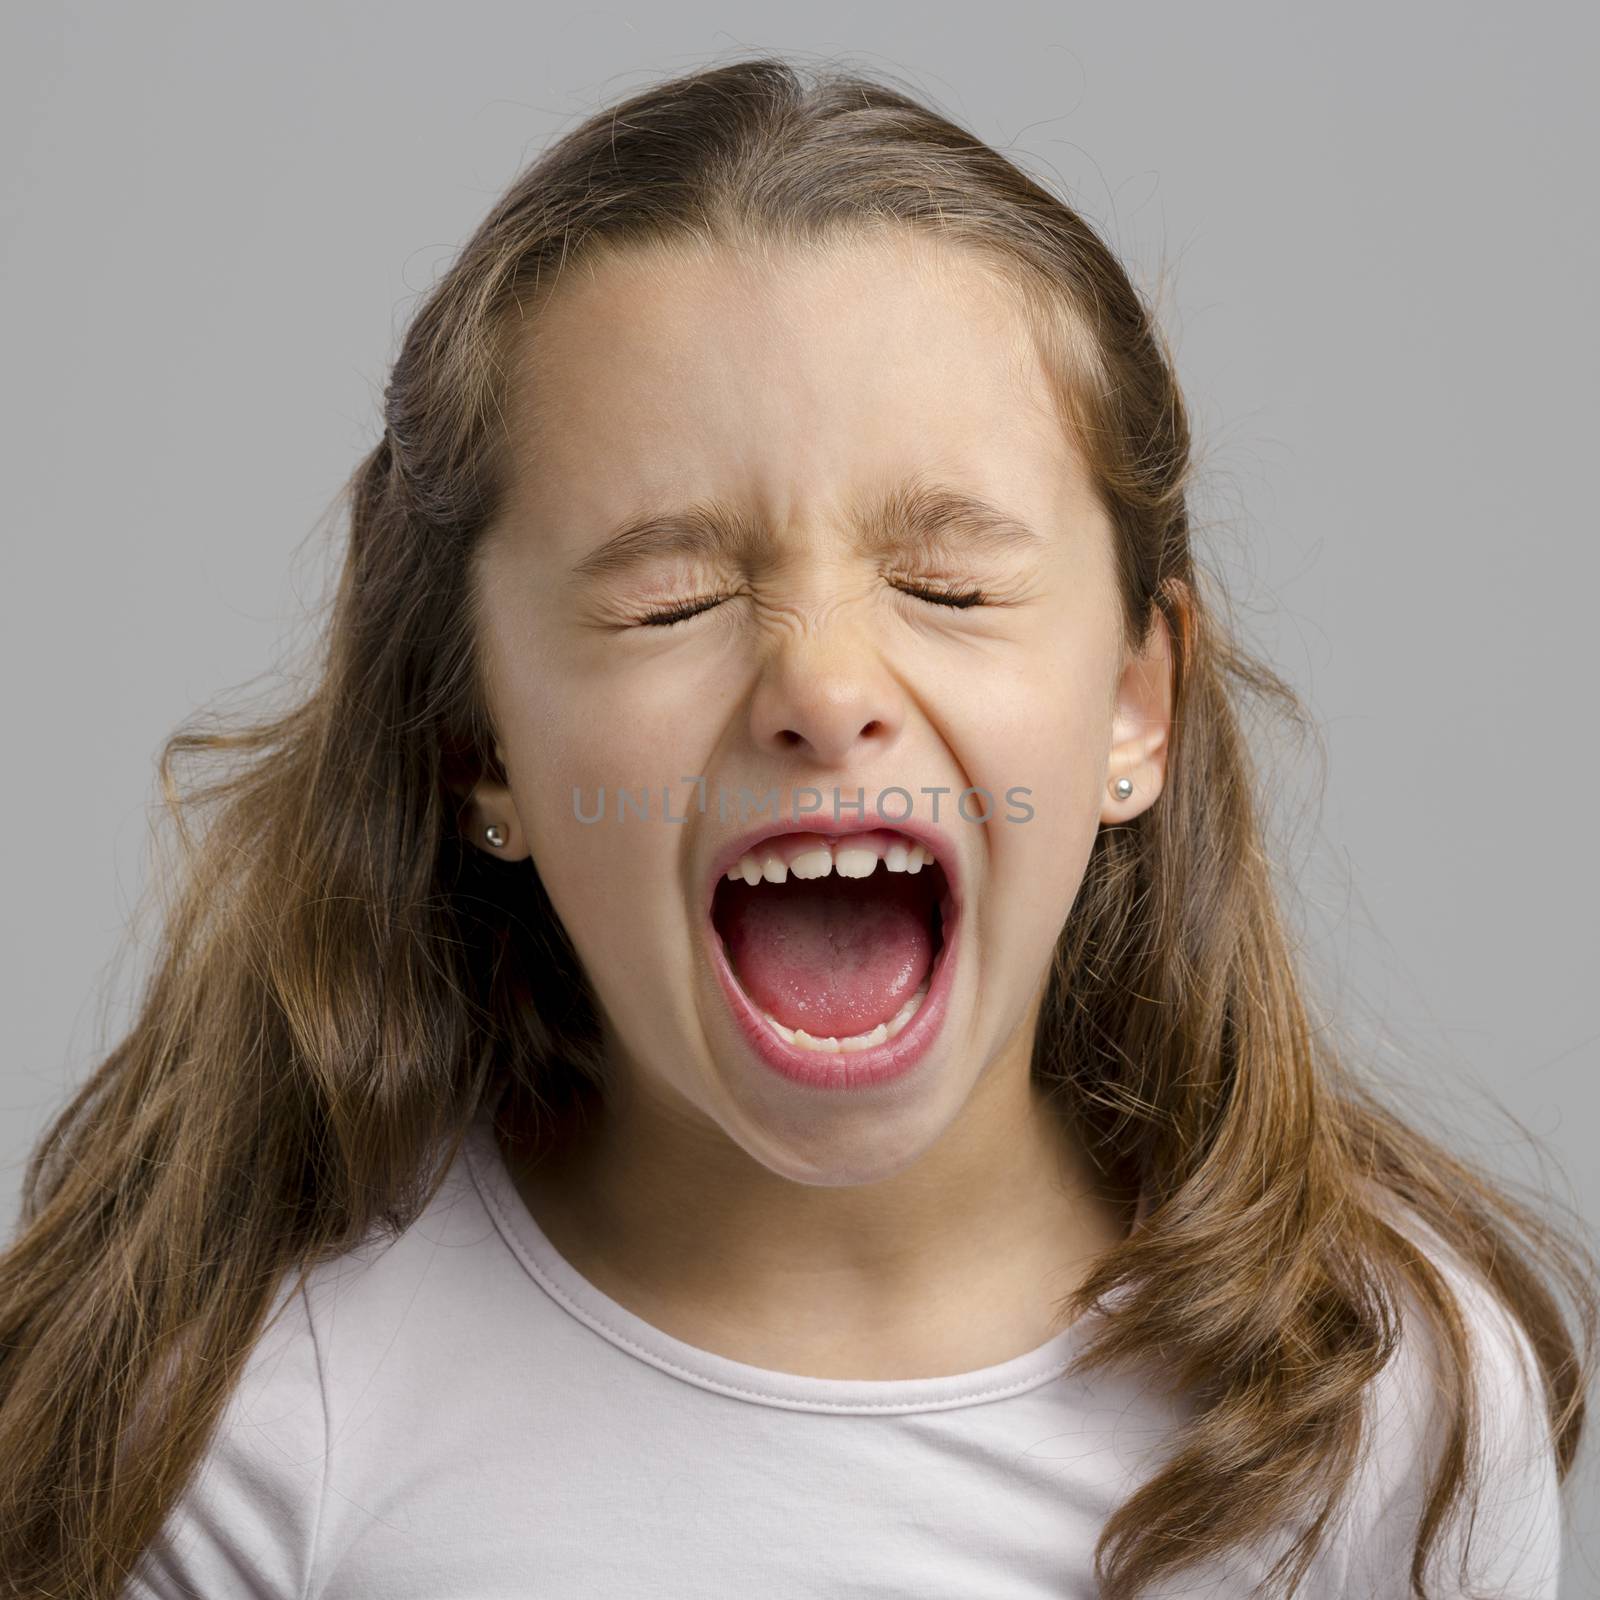 Studio portrait of a little girl yelling